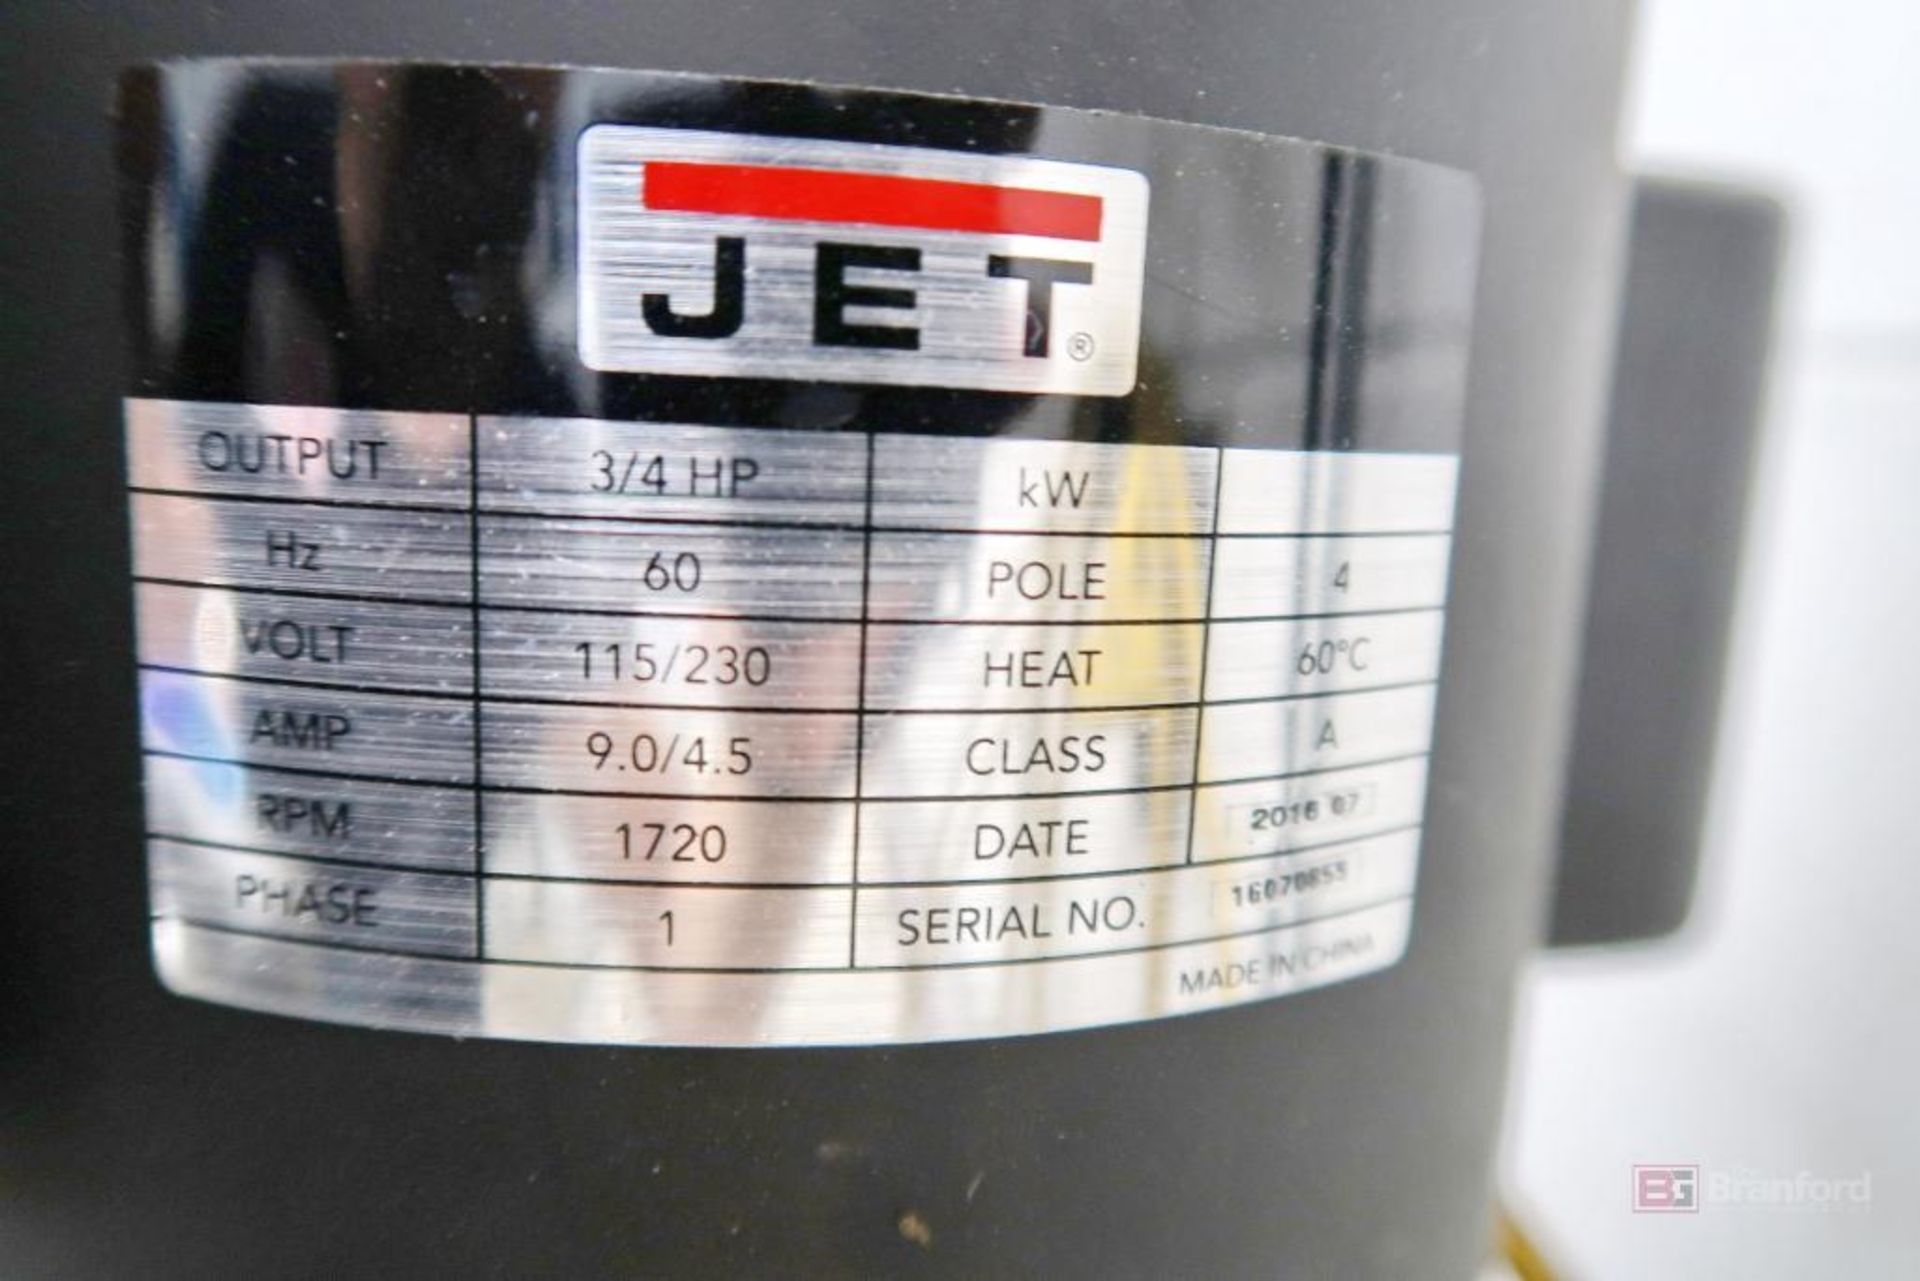 Jet 15" Floor Drill Press Model J-2500 - Image 4 of 4